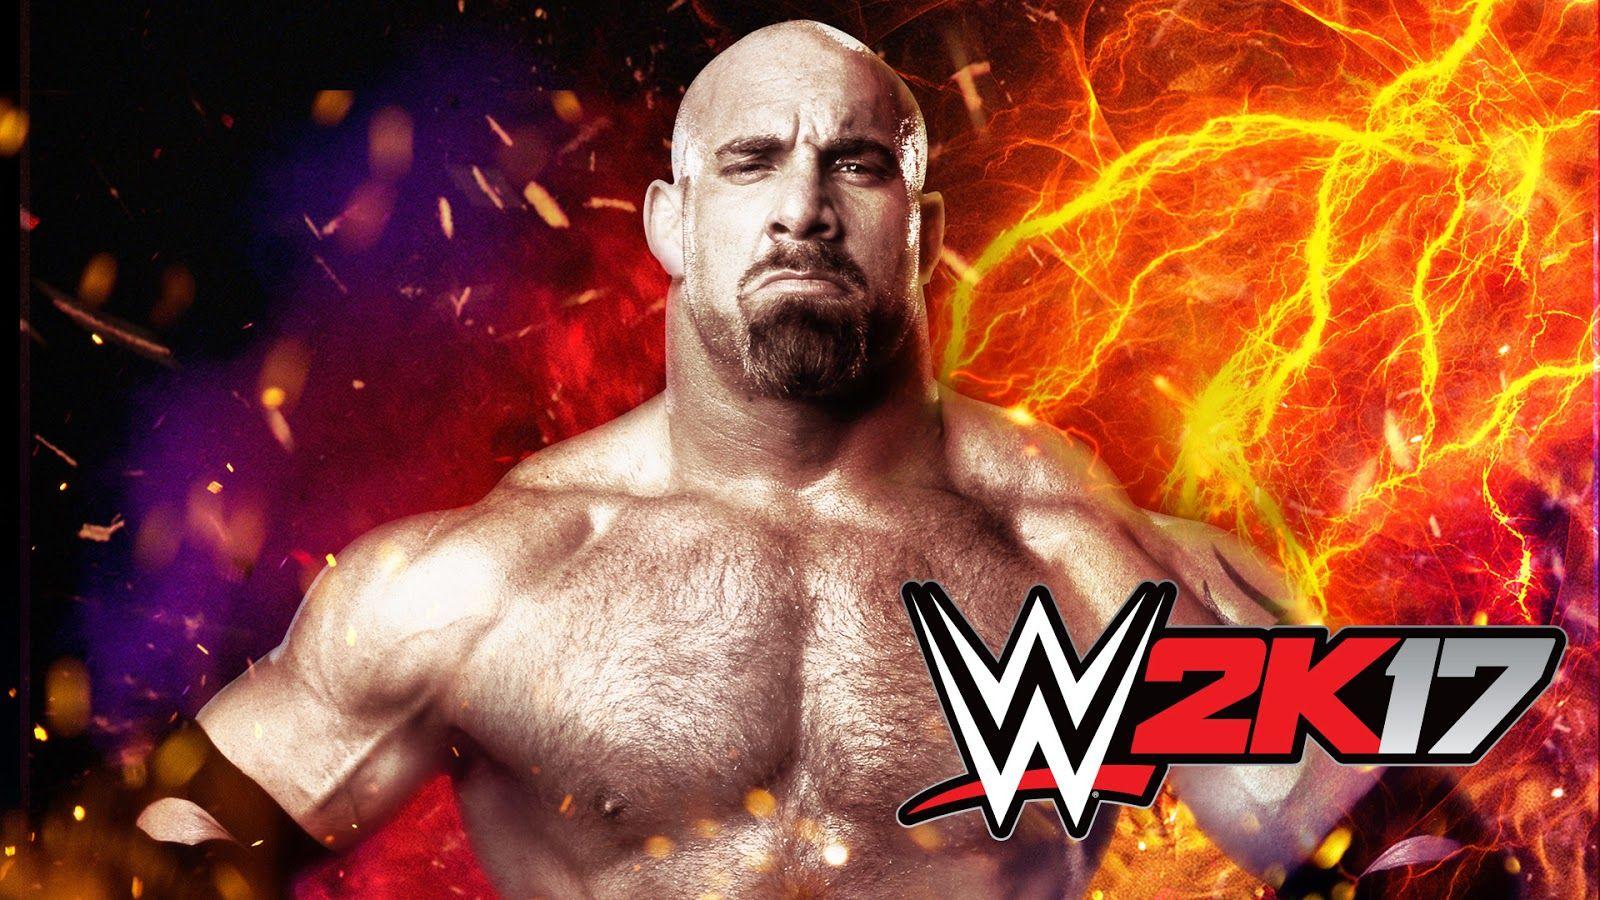 WWE 2K17 HD Wallpaper. Read games reviews, play online games